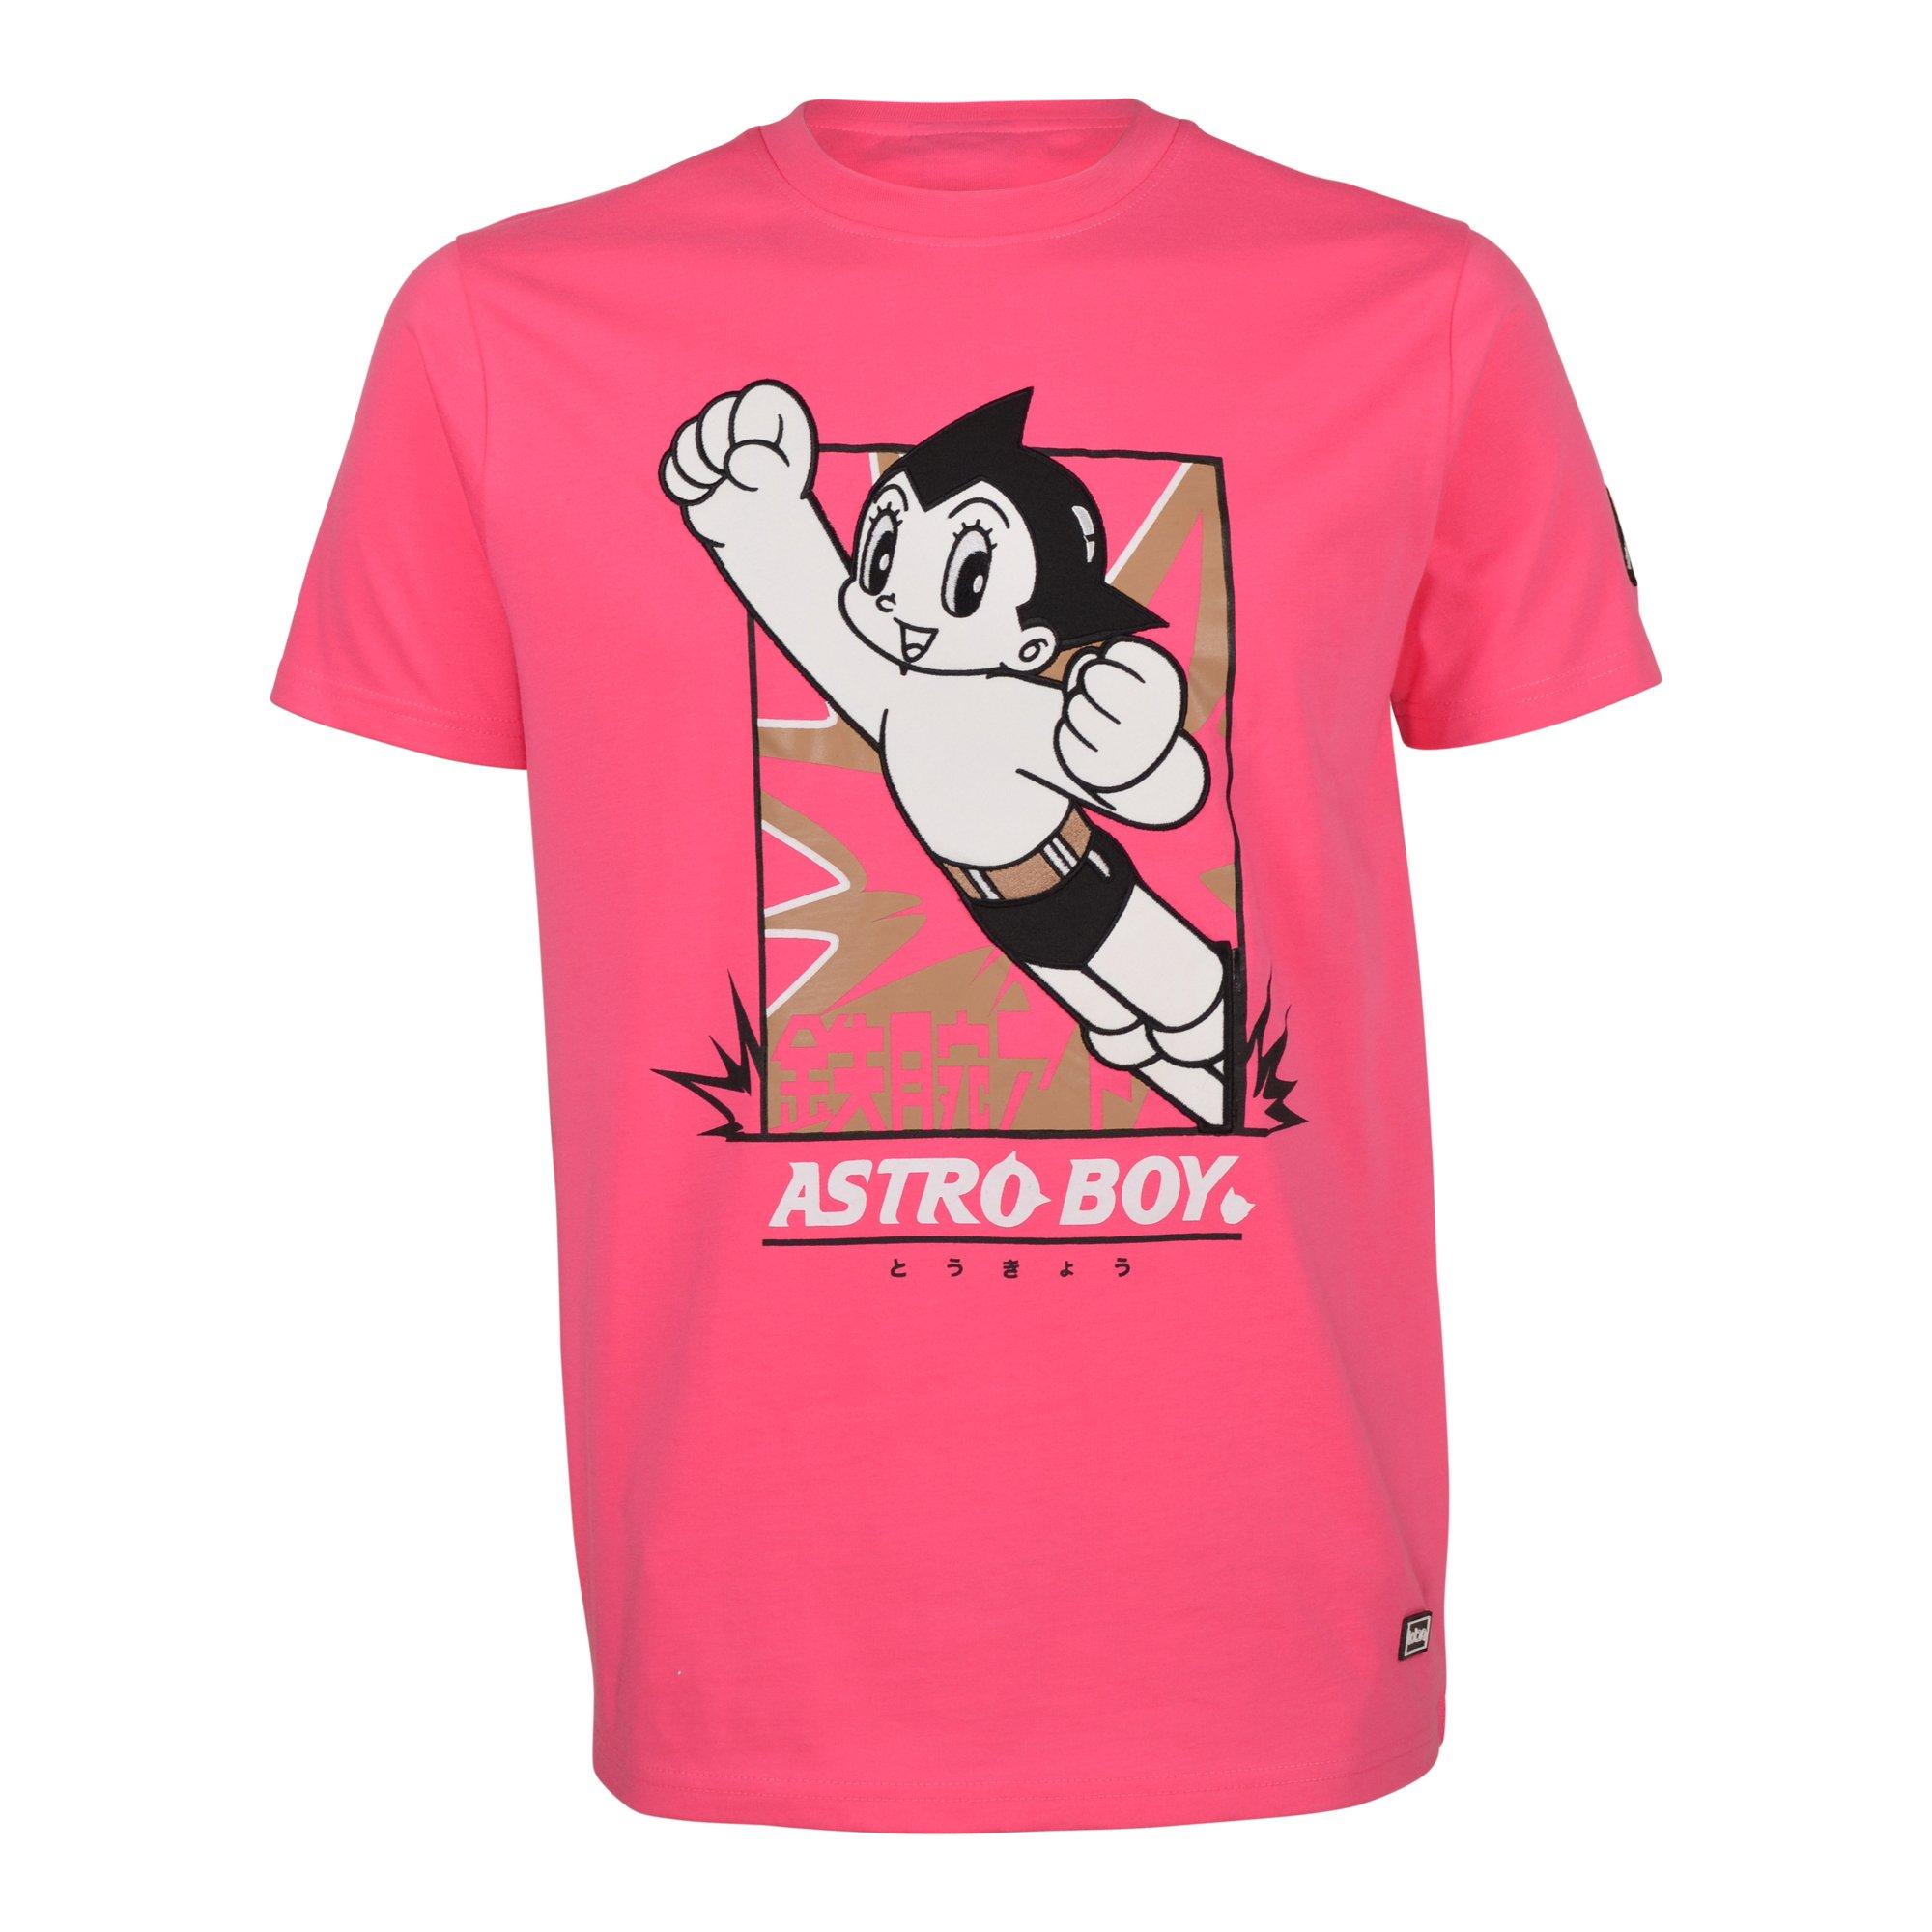 Lot29 X Astro Boy Men's Pinstripe Tee - Cream